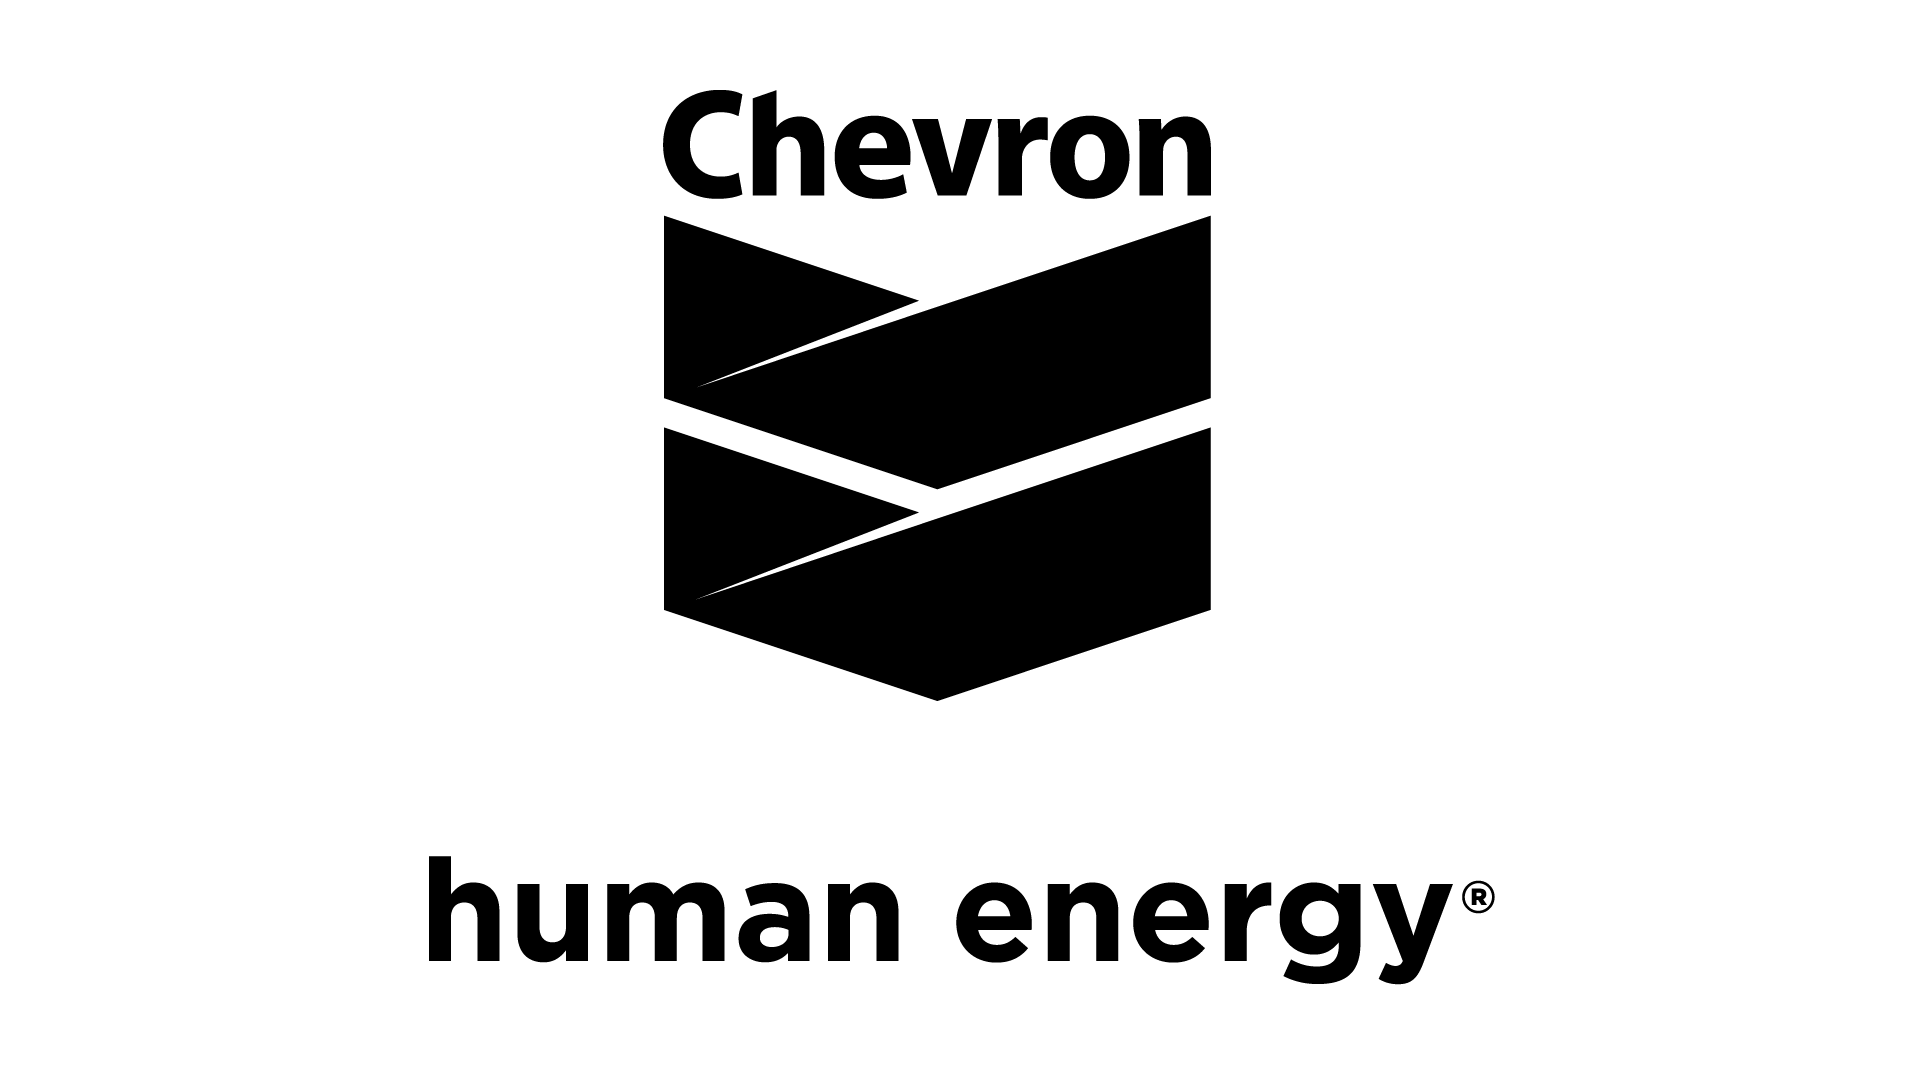 Chevron Human Energy logo